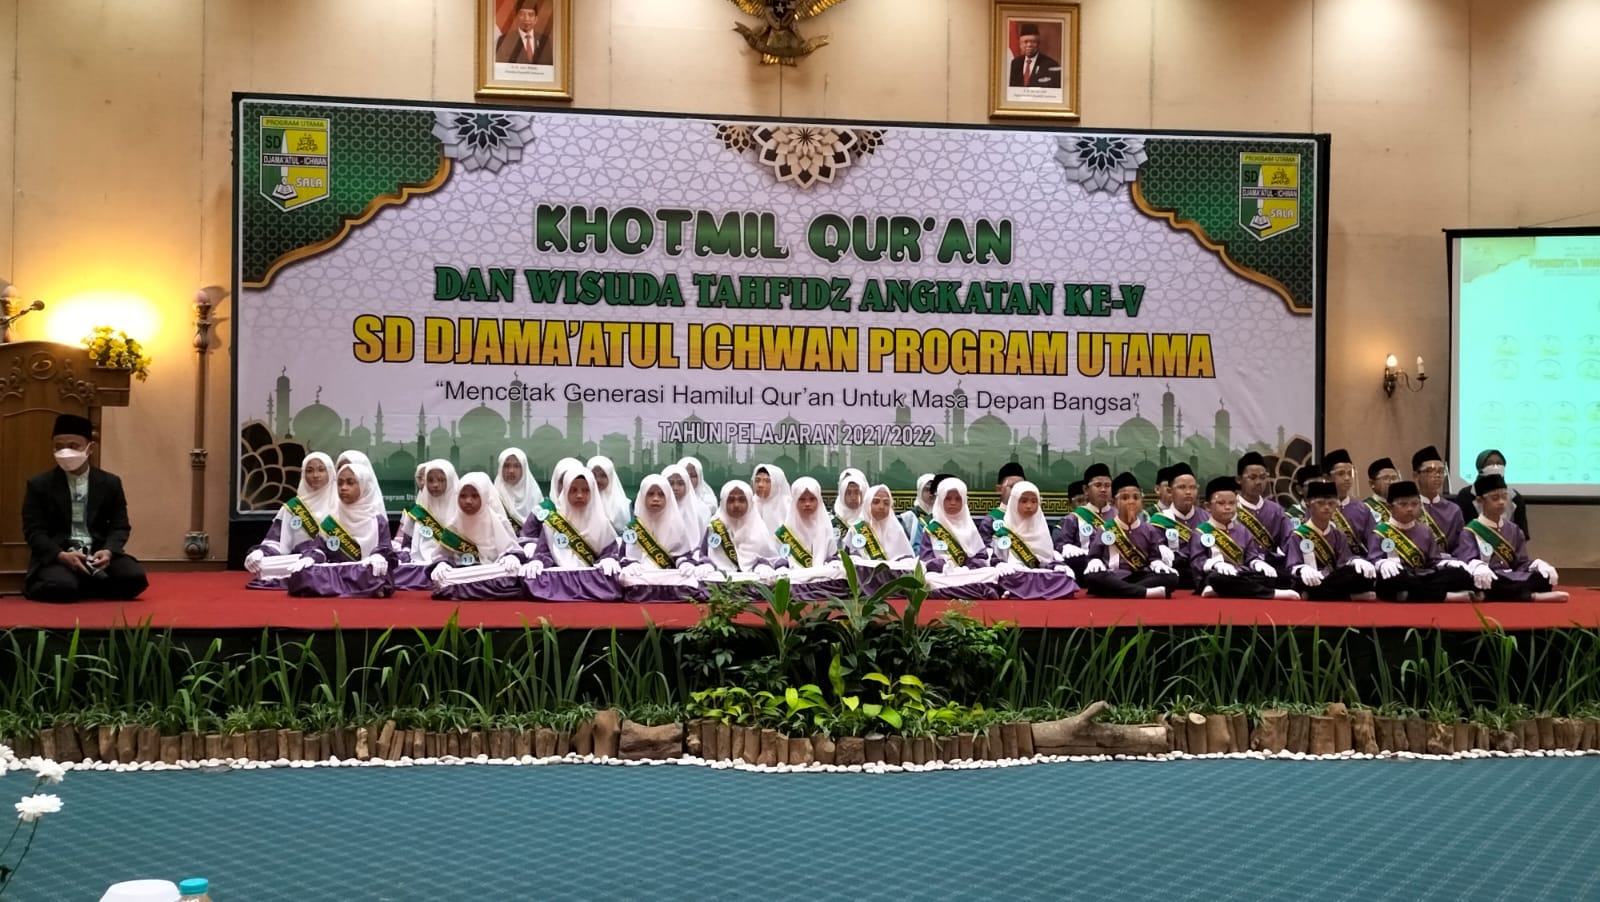 Qhotmil Quran Angkatan Ke 5 Sd Djamaatul Ichwan Program Utama Sd Djamaatul Ichwan Program Utama 7592